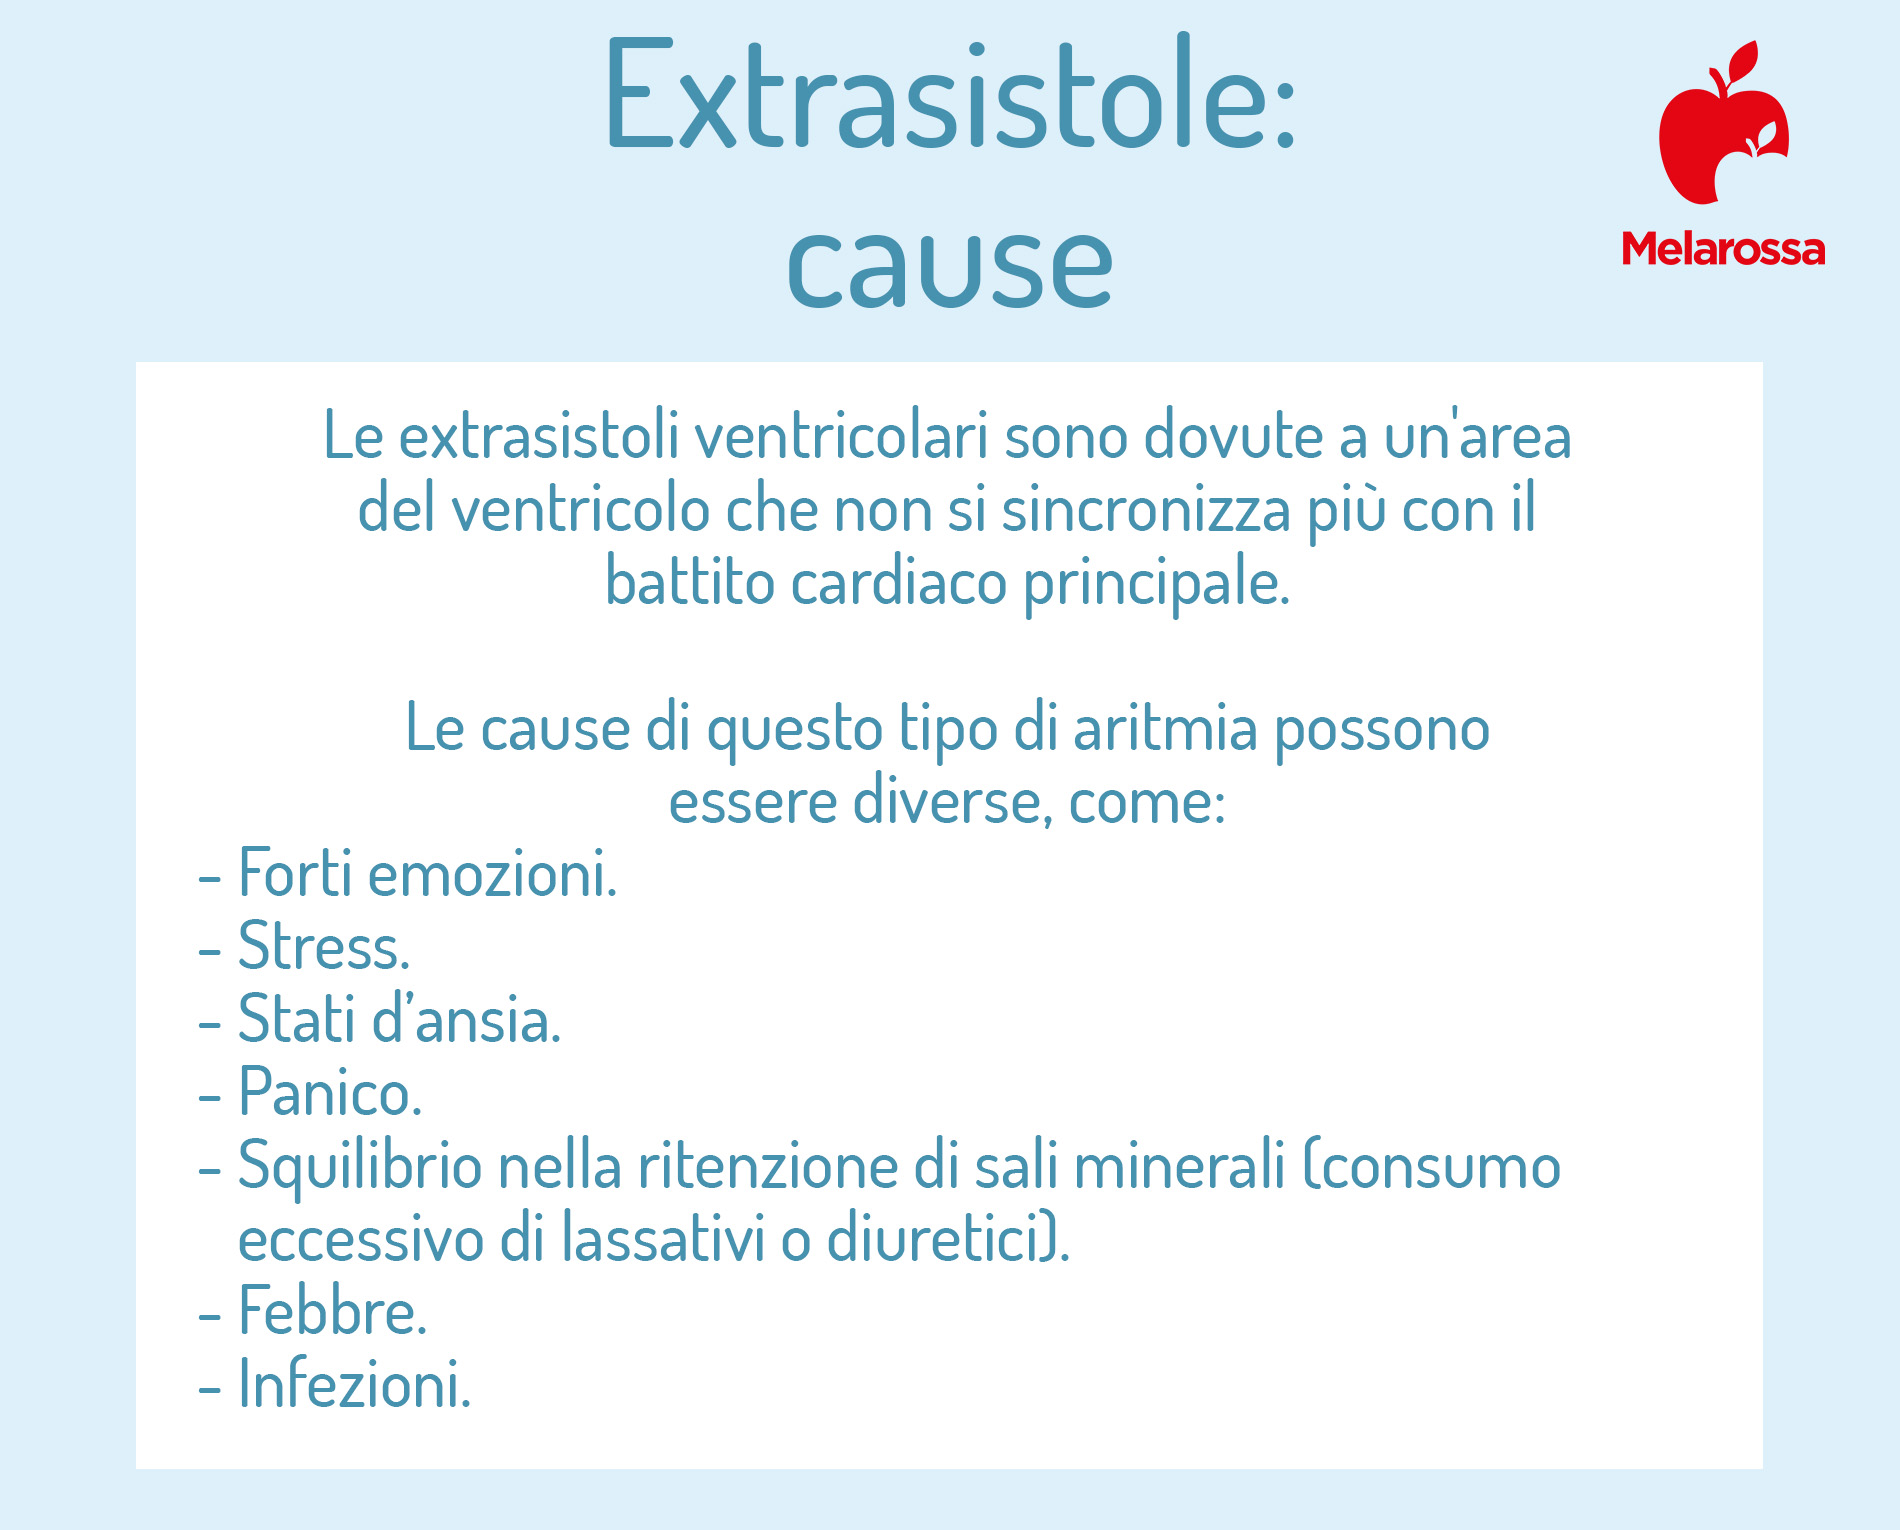 extrasistole: cause